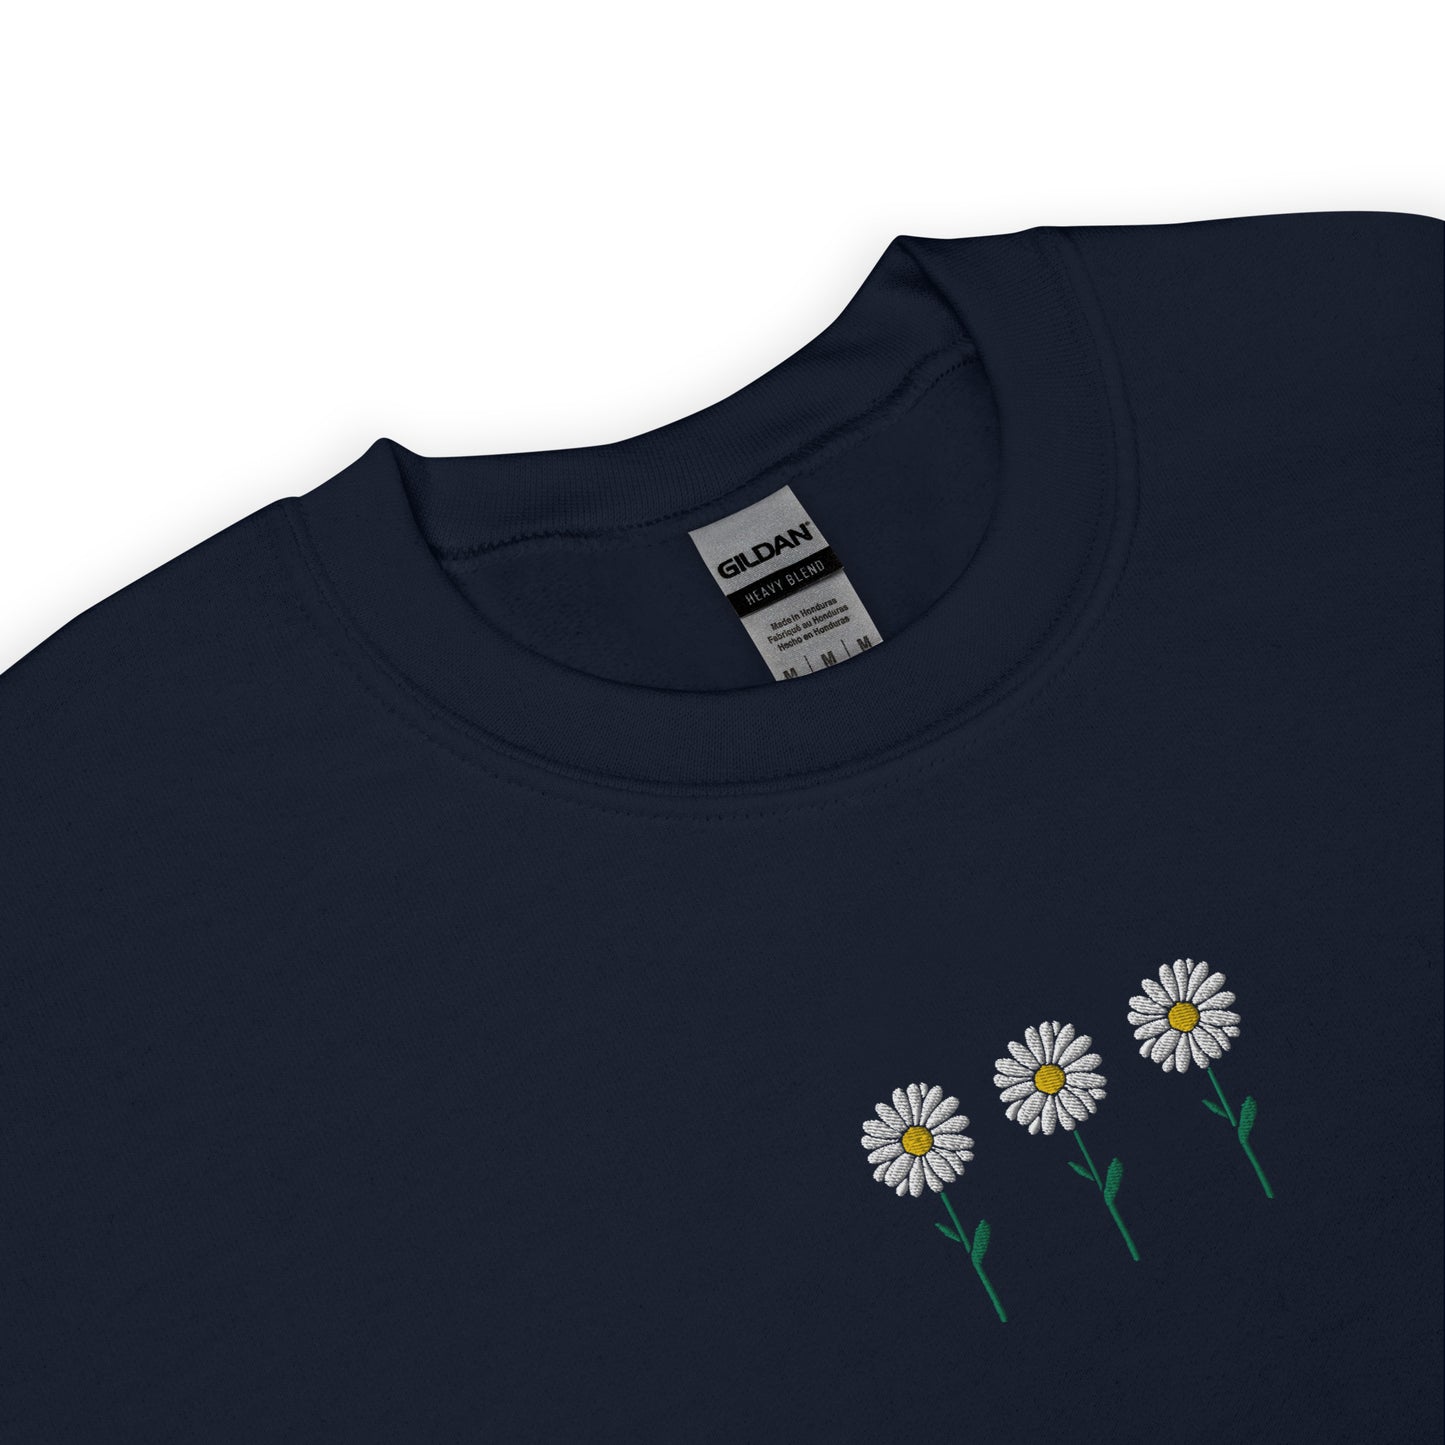 Daisies Embroidered  Sweatshirt